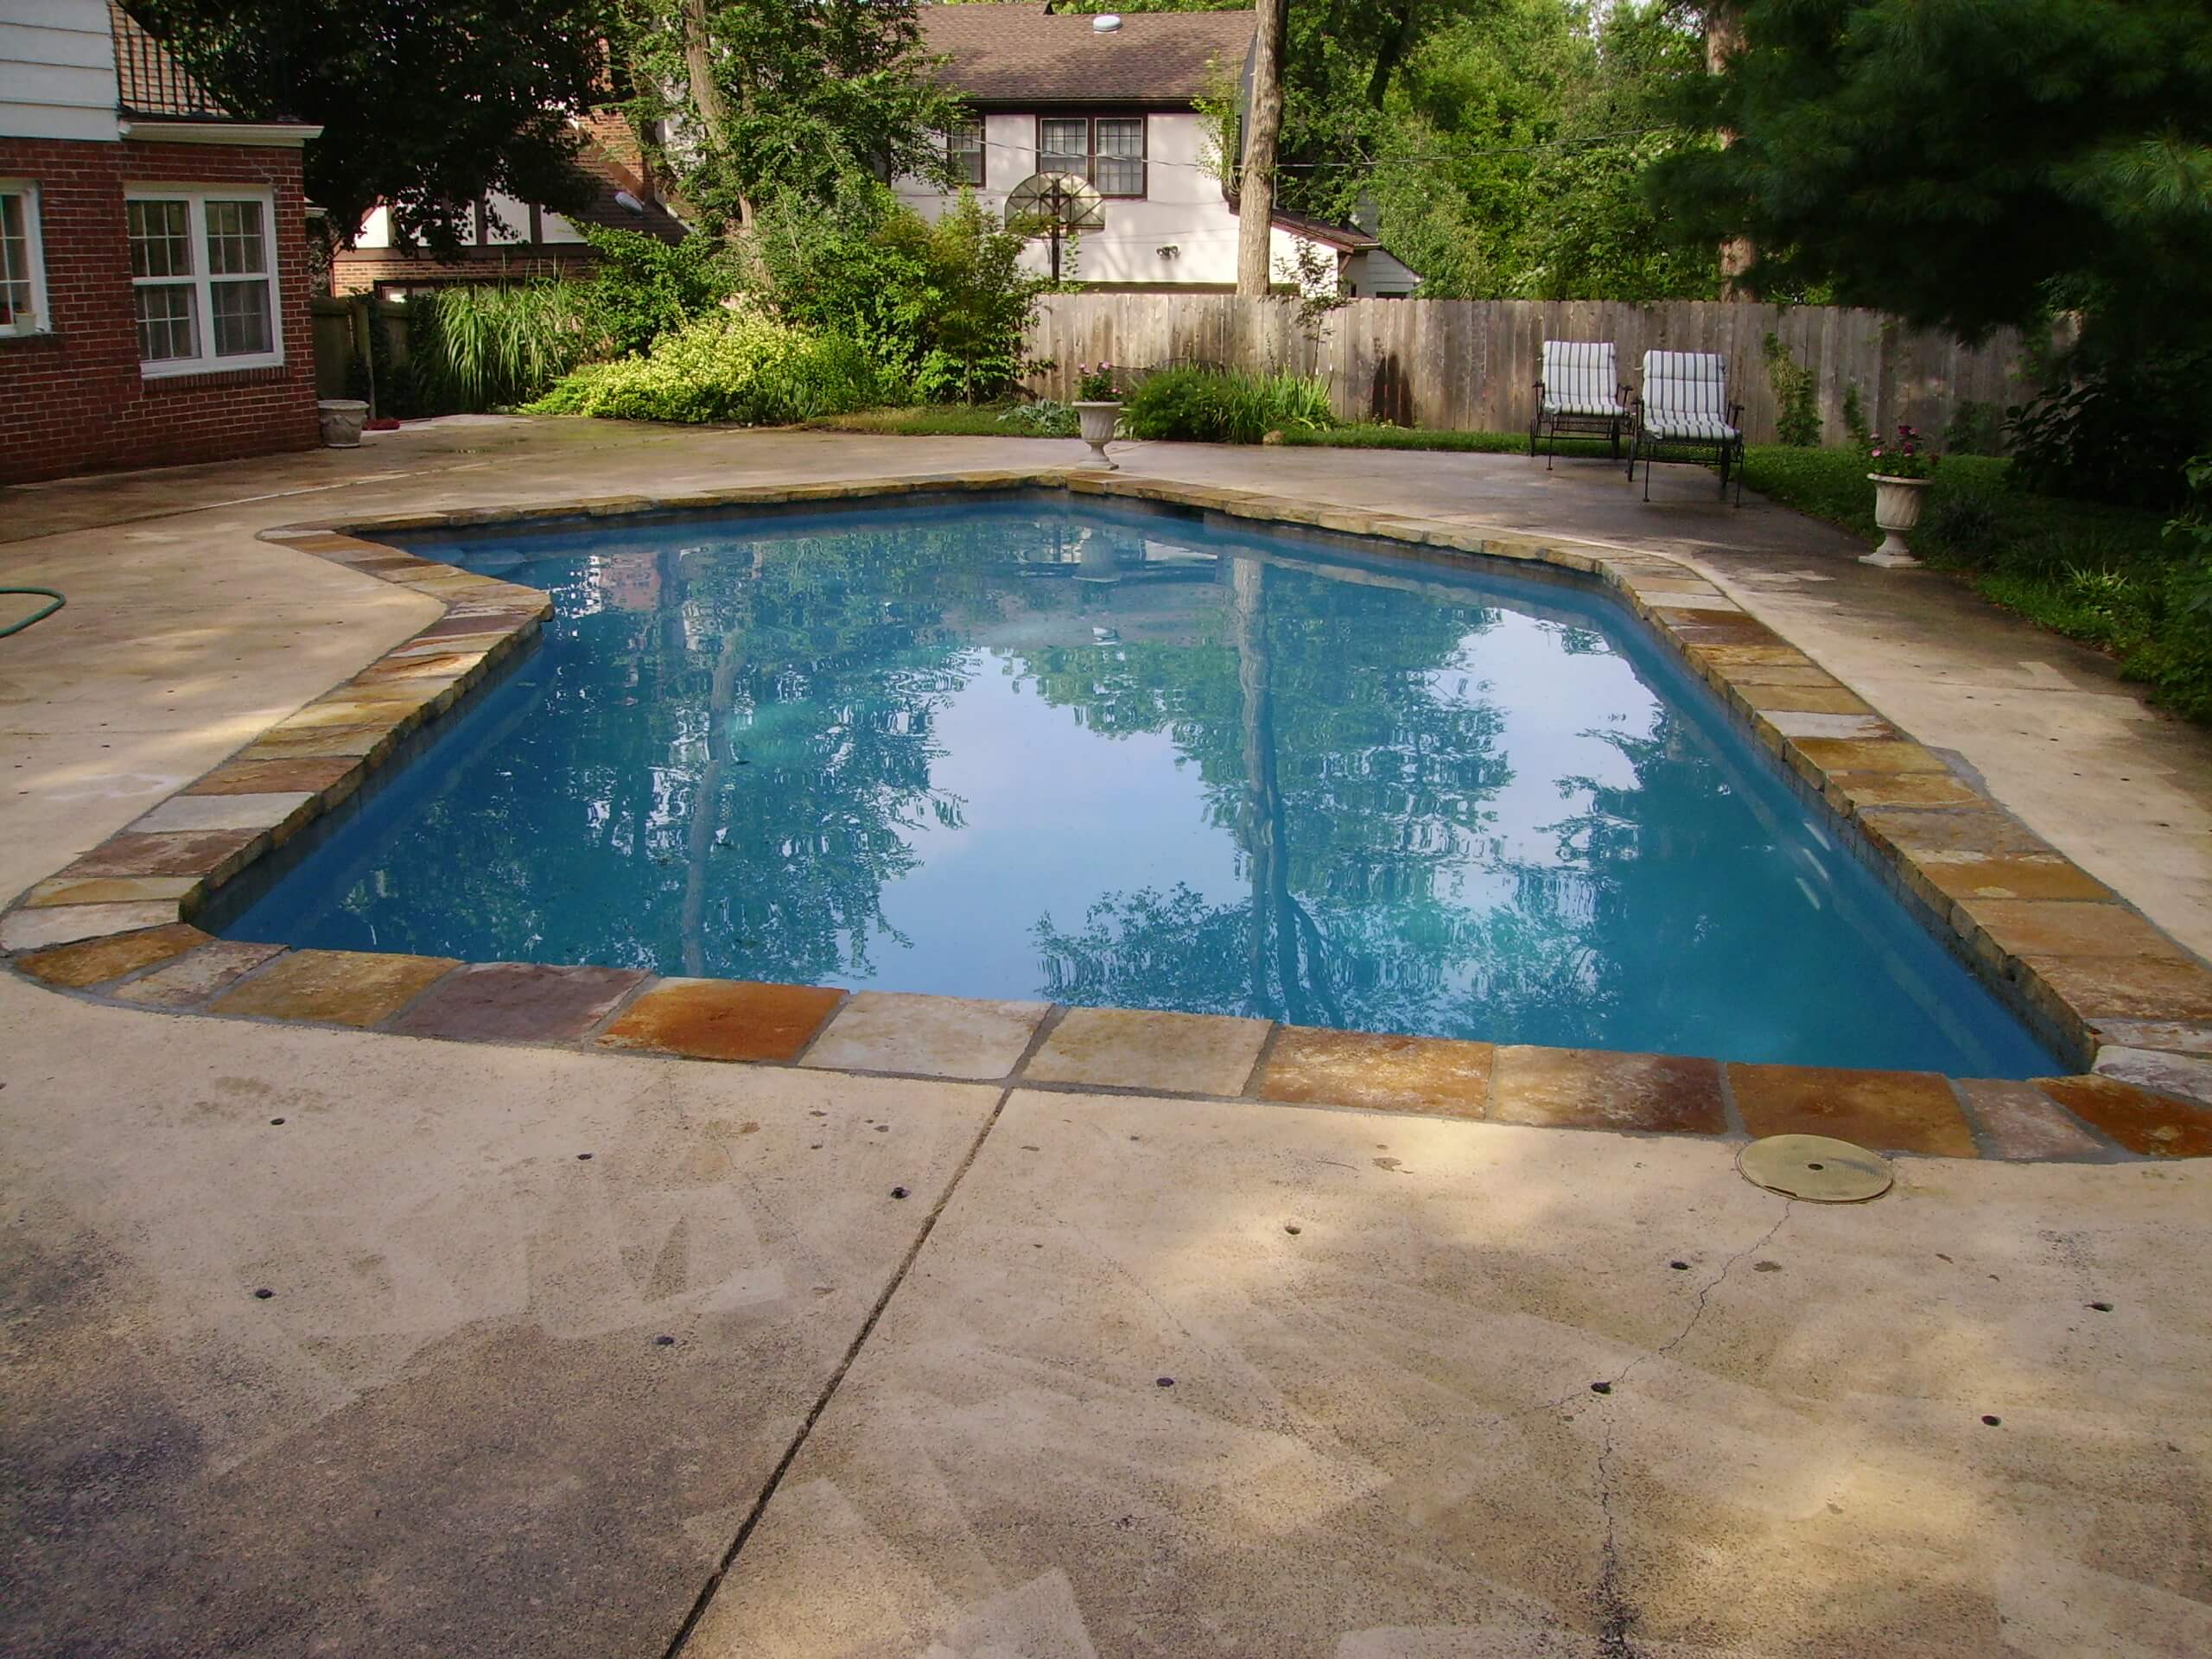 New Swimming Pool Coping, Stones, and Bricks - Mid-America Pool Renovation